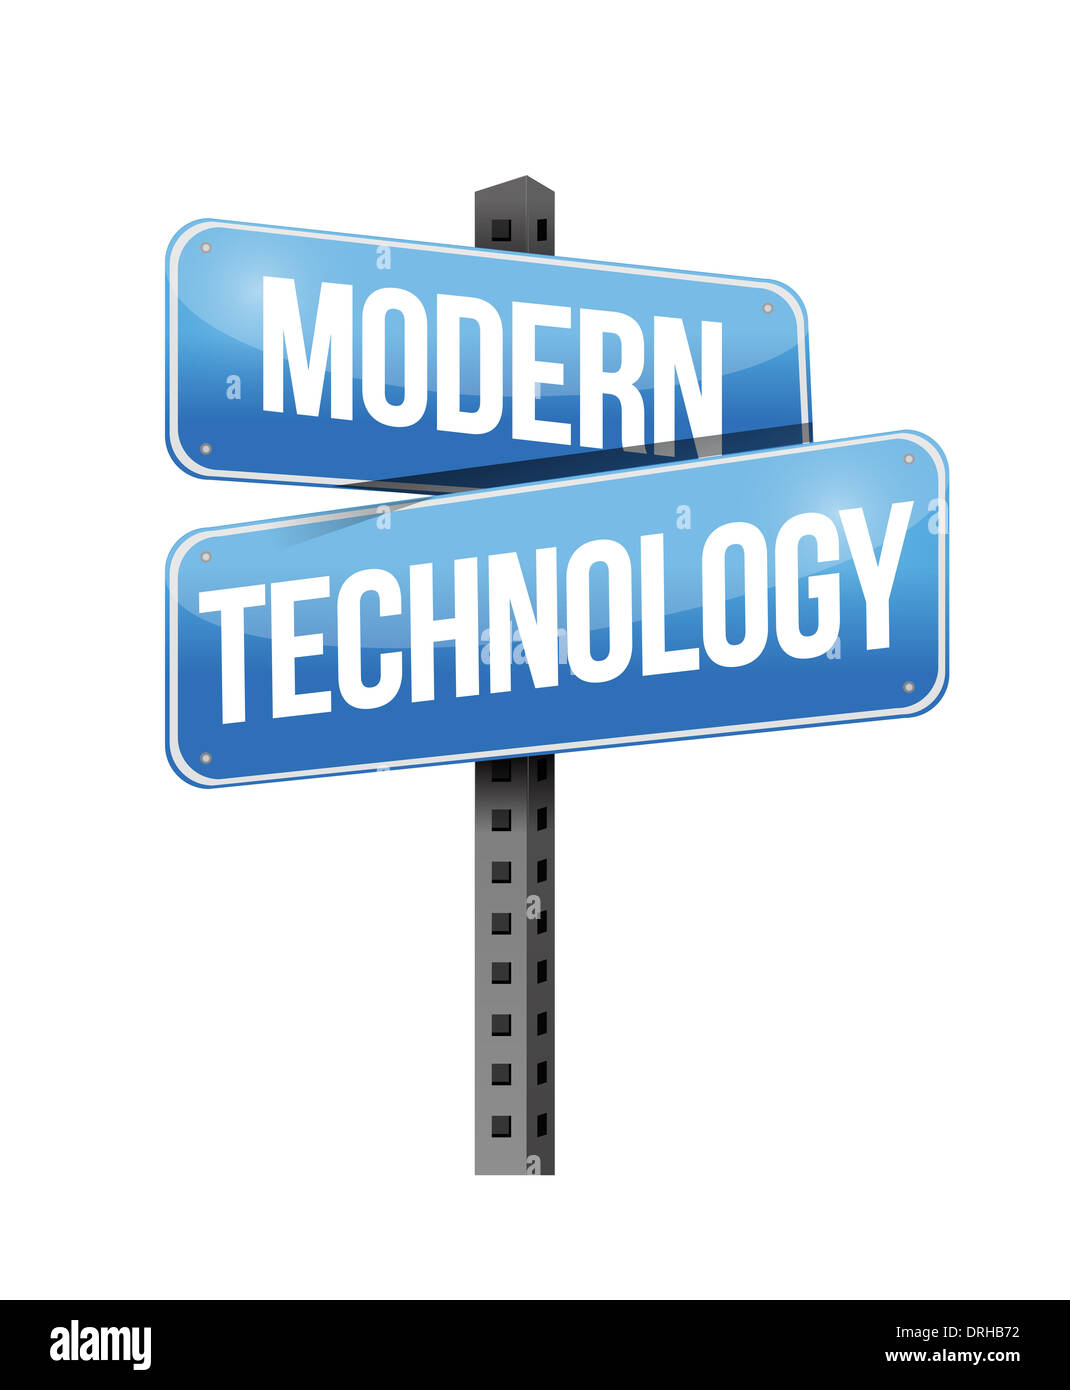 modern technology illustration design over a white background Stock Photo